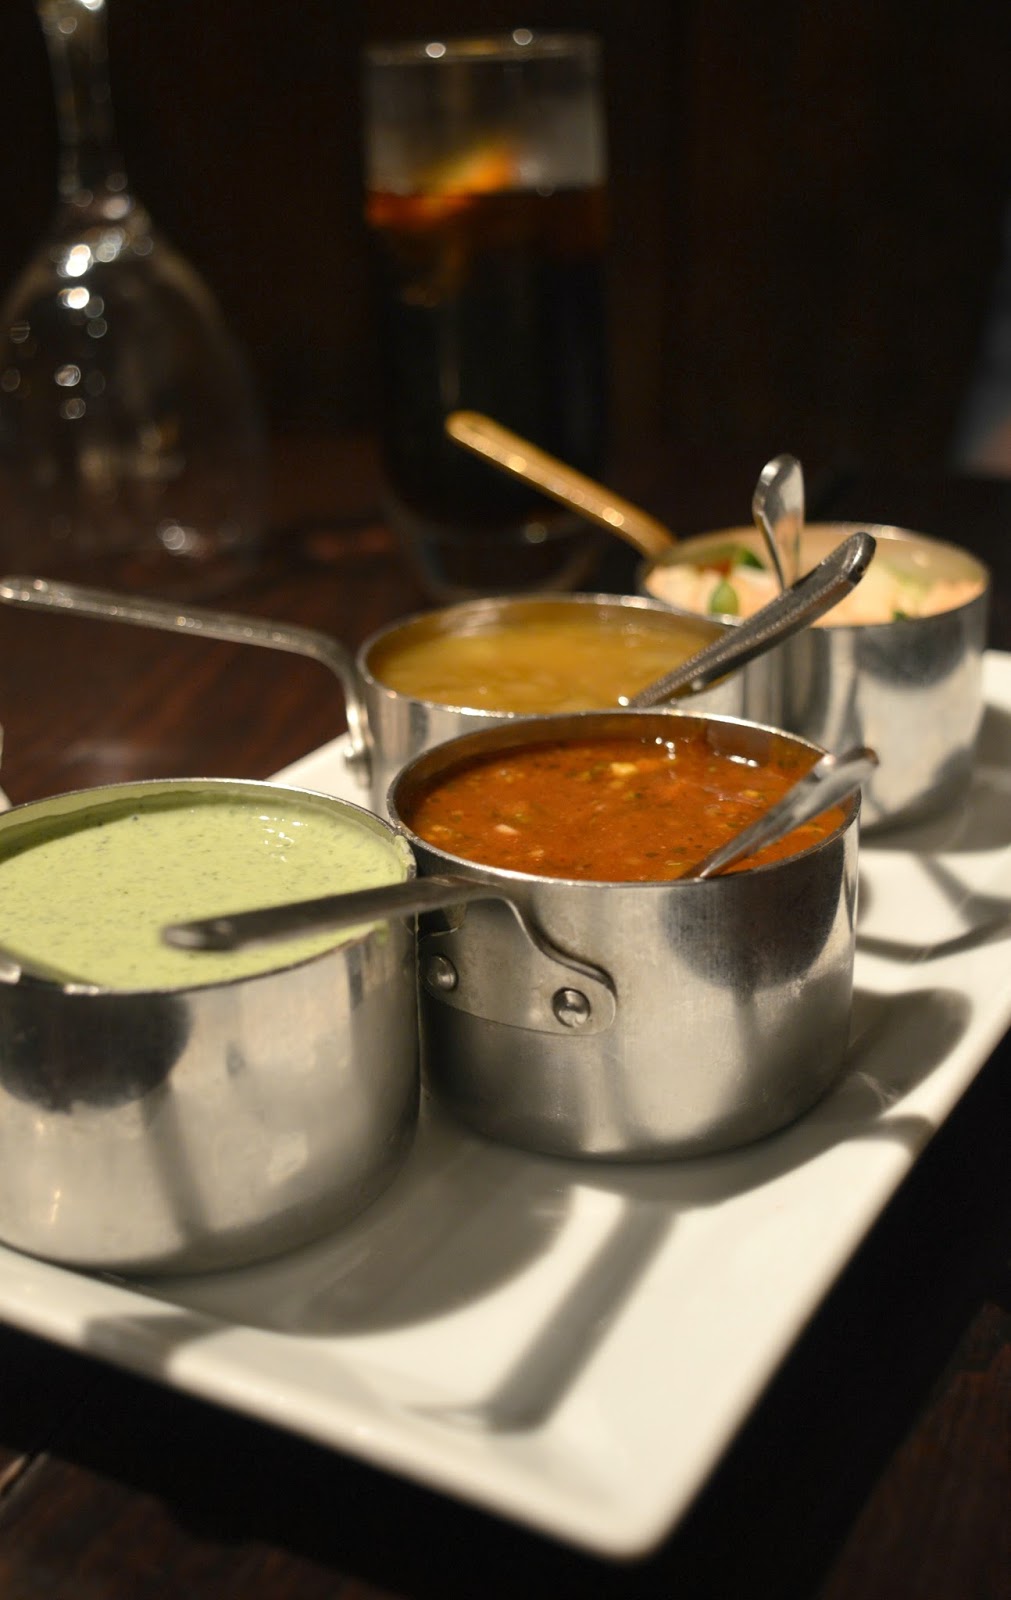 Sachins Indian Restaurant in Newcastle - Poppadoms